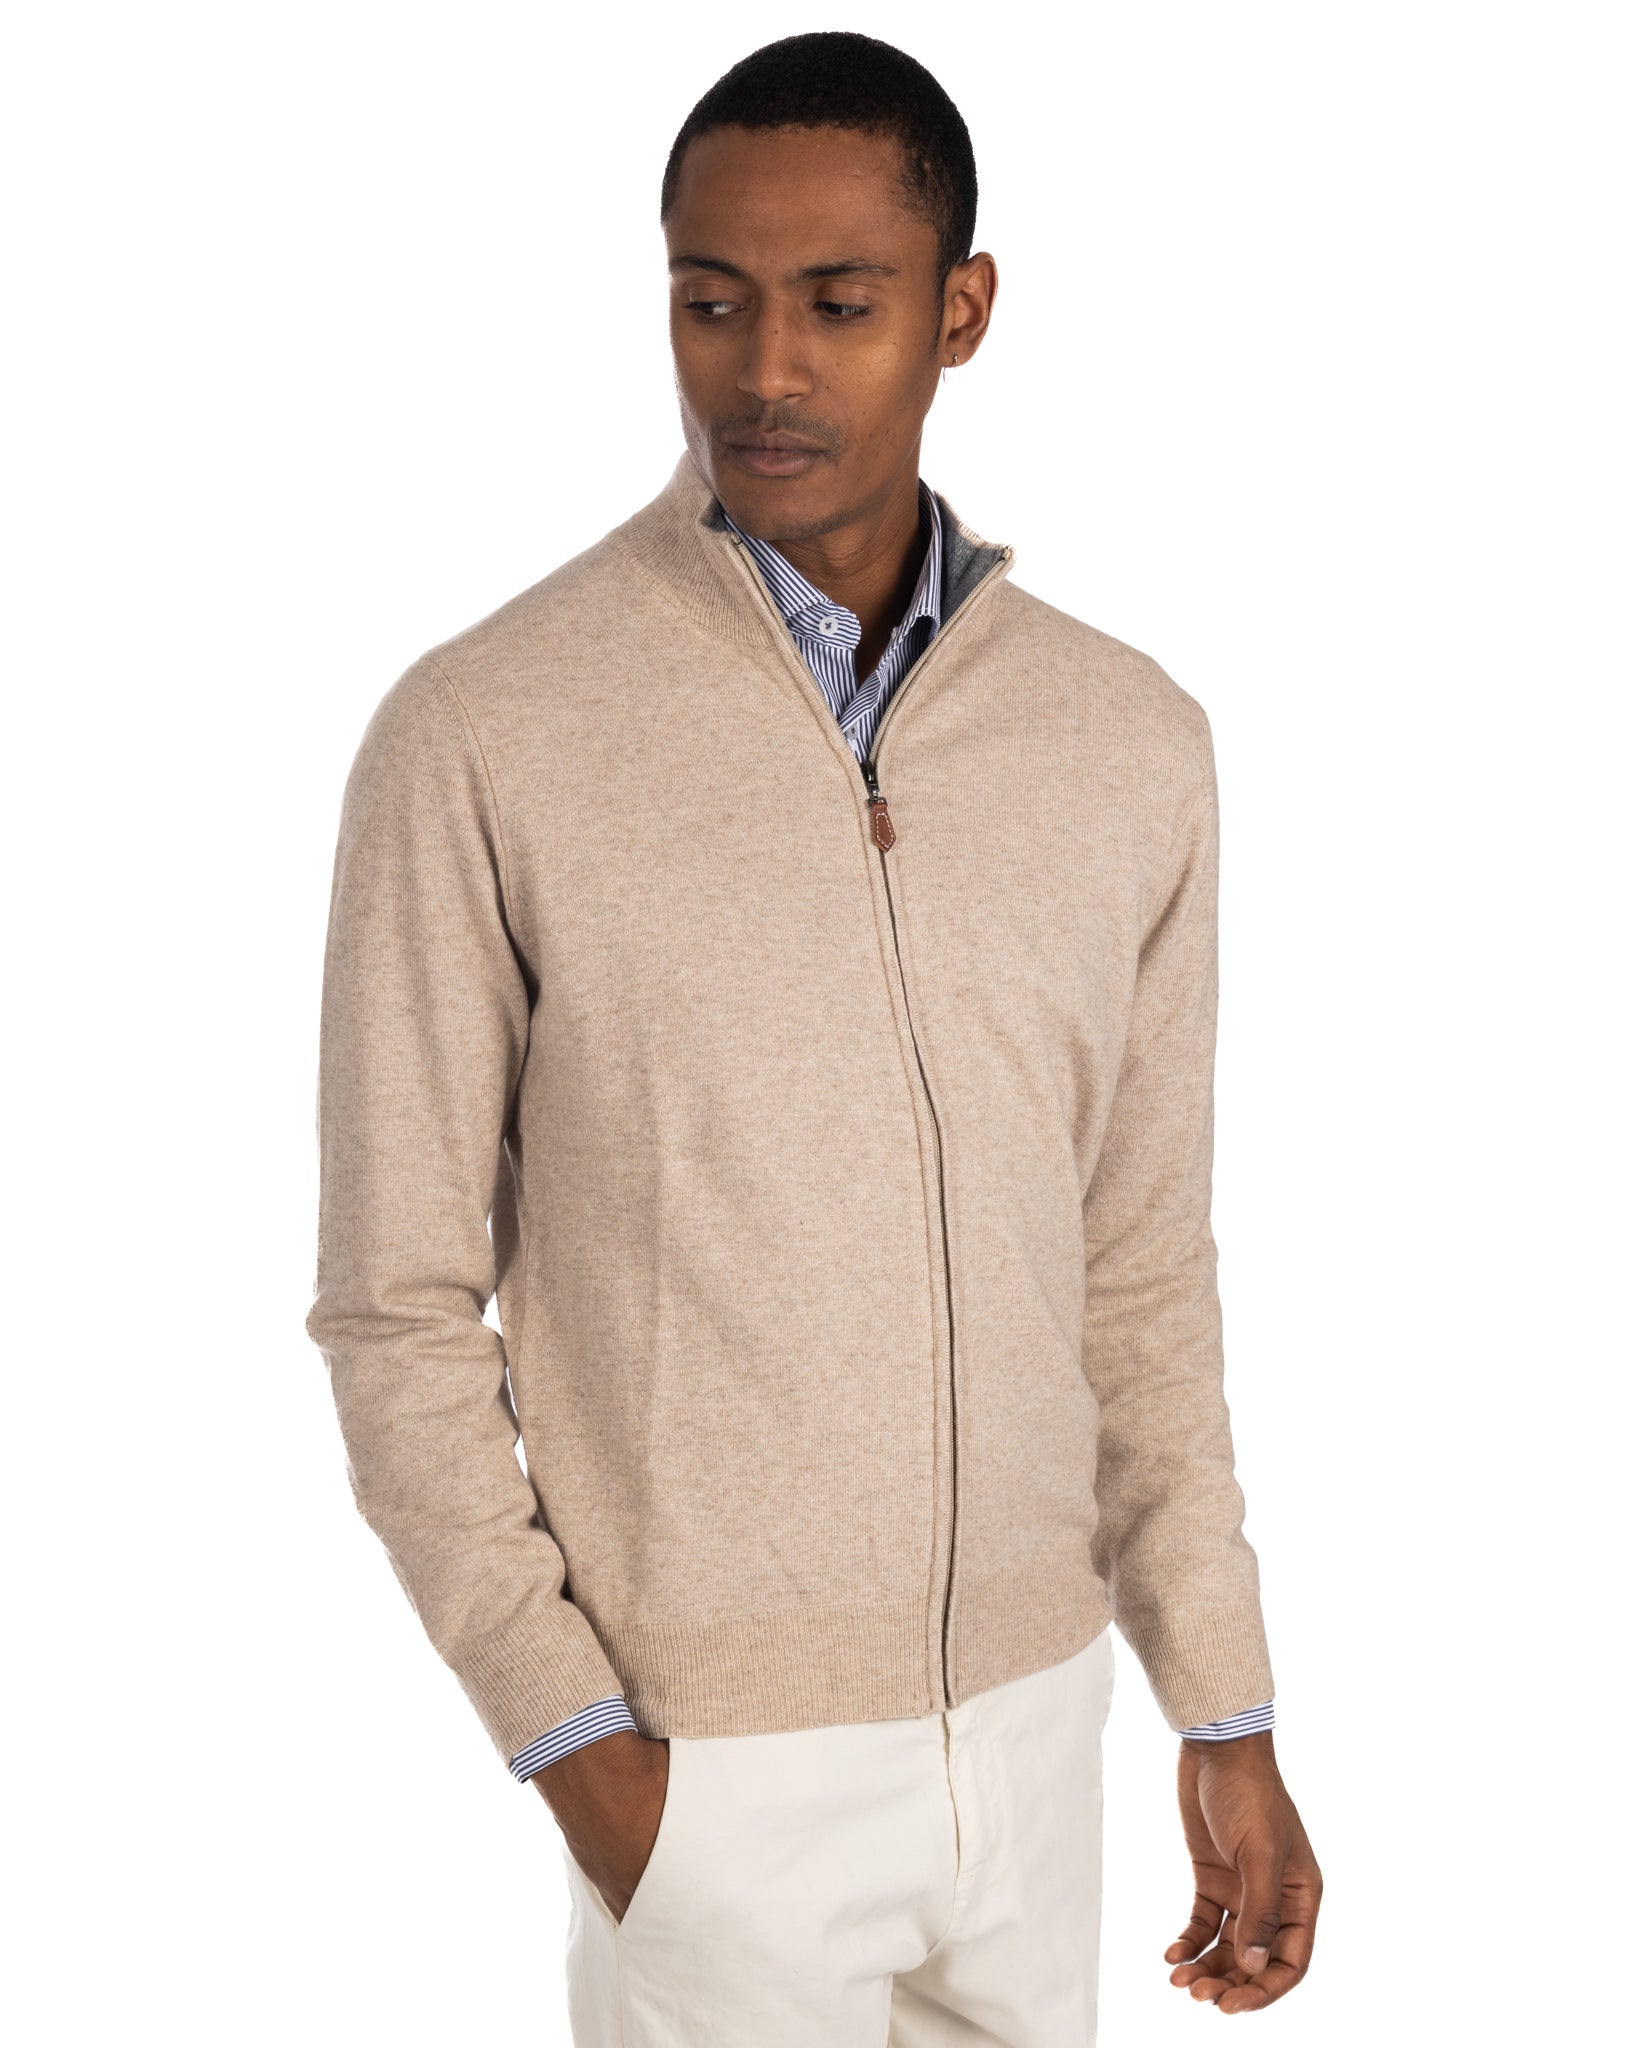 Matt - beige full zip sweater in cashmere blend